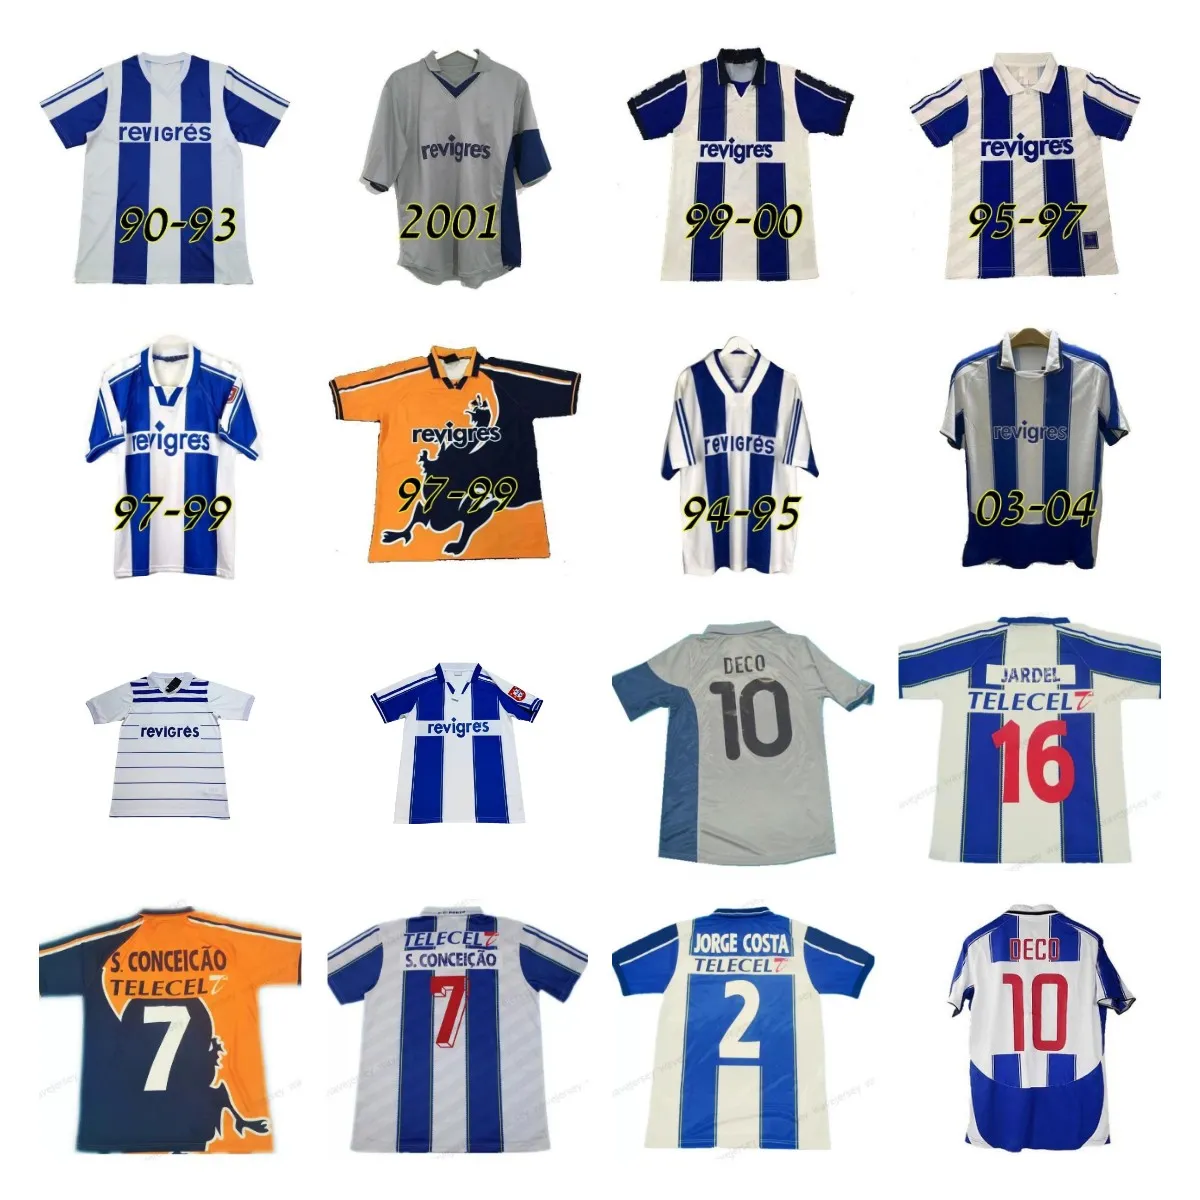 1985 86 94 95 97 98 99 Porto Retro Soccer Jerseys 2001 03 04 Cup Final home  away Men MACIEL DECO finals Vintage maillots de Football Shirt McCARTHY